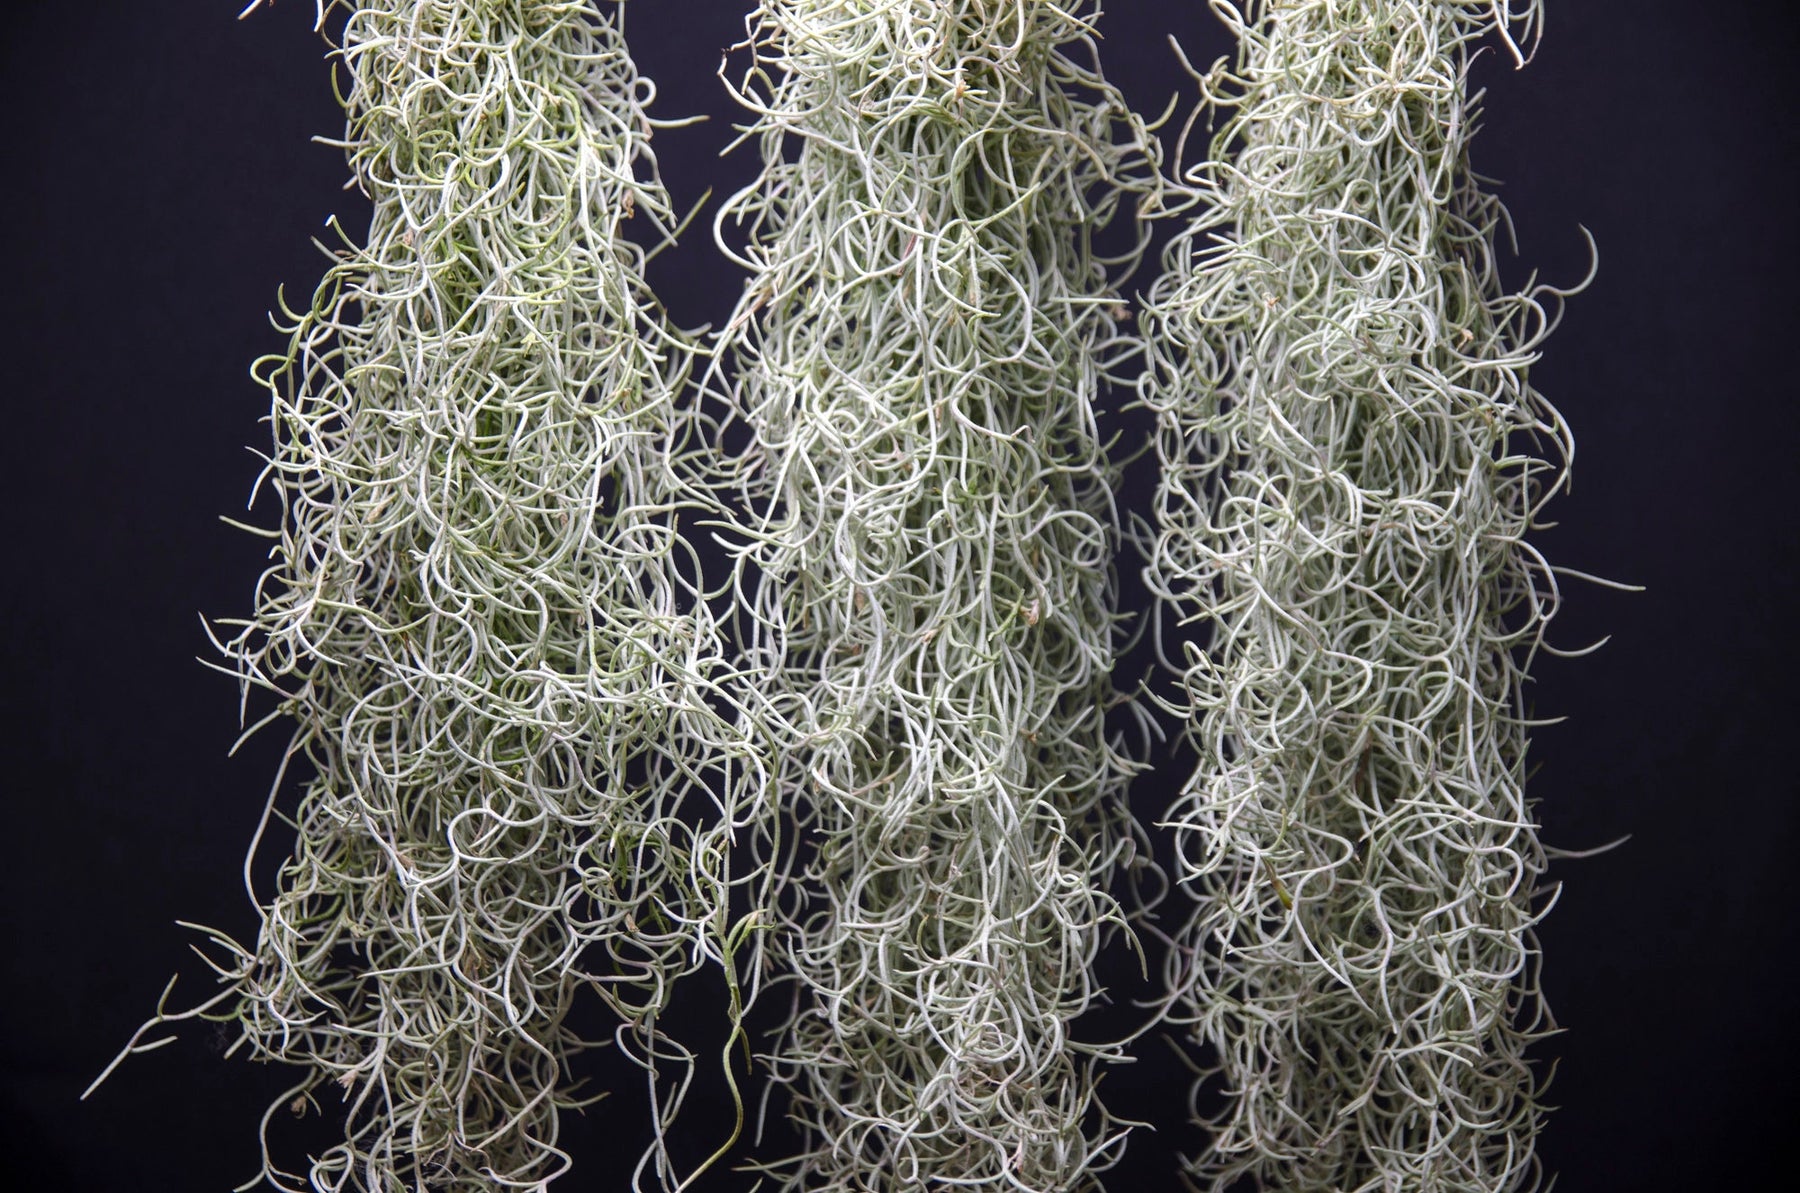 Spanish Moss Rare Curly Form - Fragrant Orange Blossoms – The Artizan Way